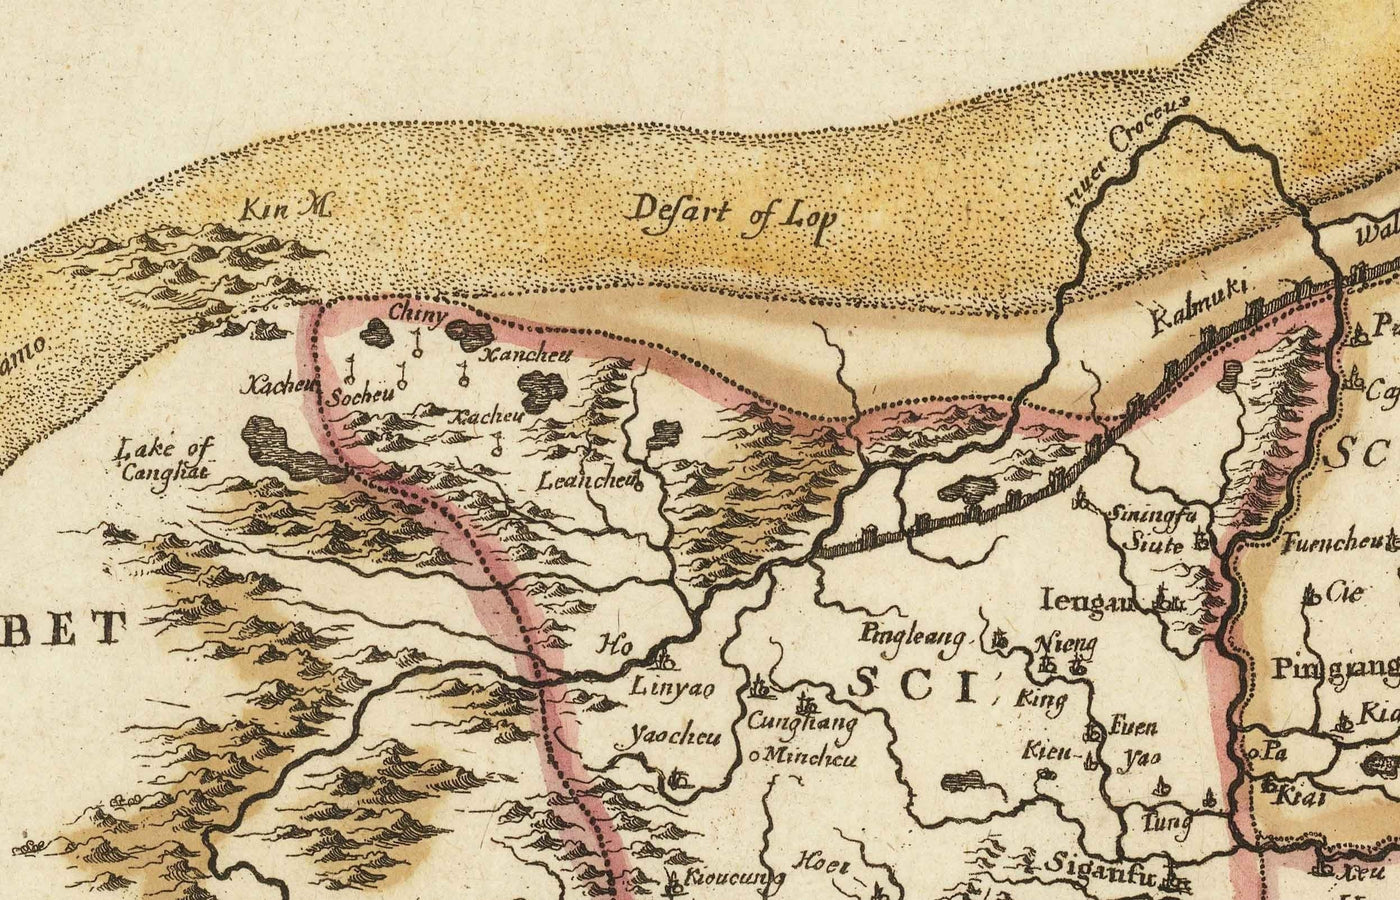 Old Map of China and East Asia, 1669 par Blome - Grande mur, cantons, Corée, Japon, Vietnam, Thaïlande, Cambodge